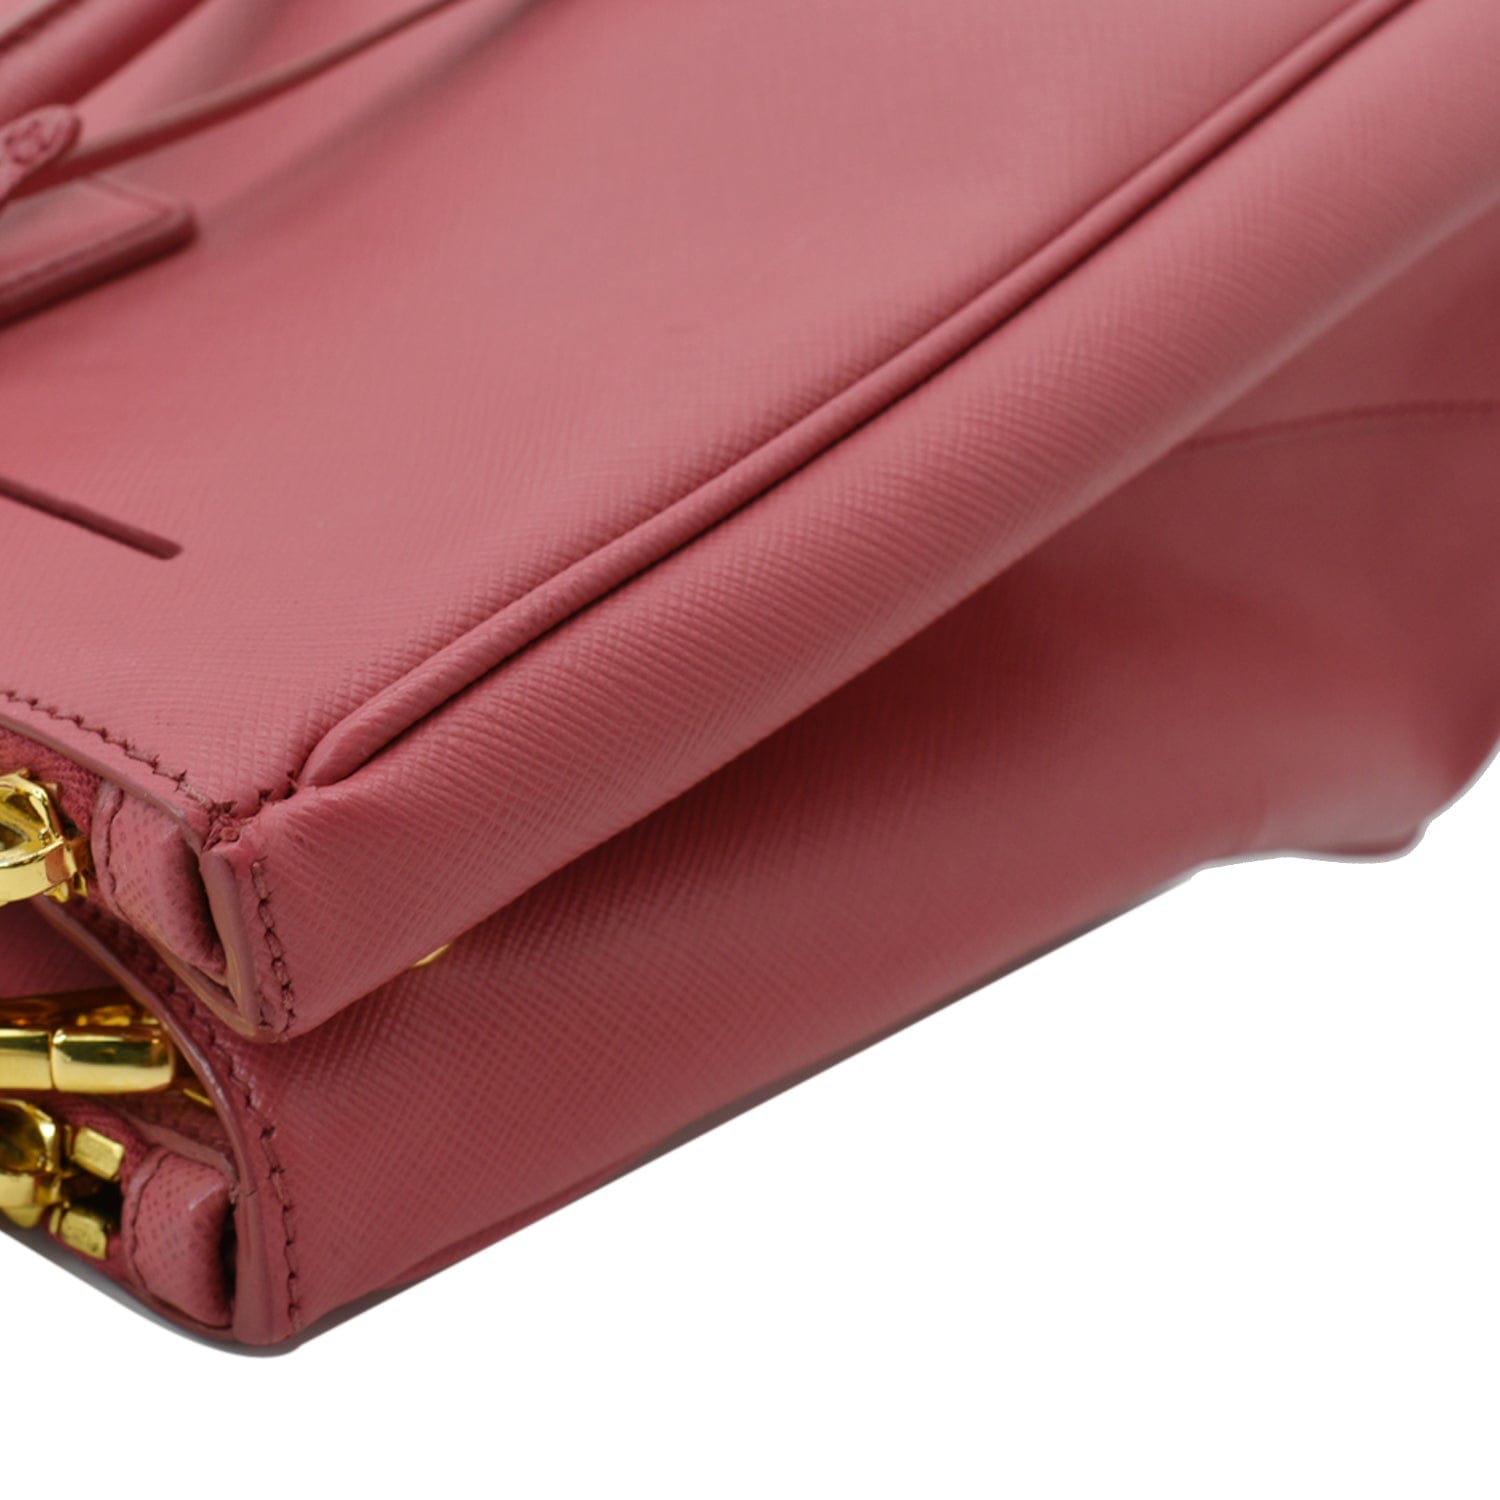 PRADA Galleria Large Saffiano Leather Tote Bag Pink